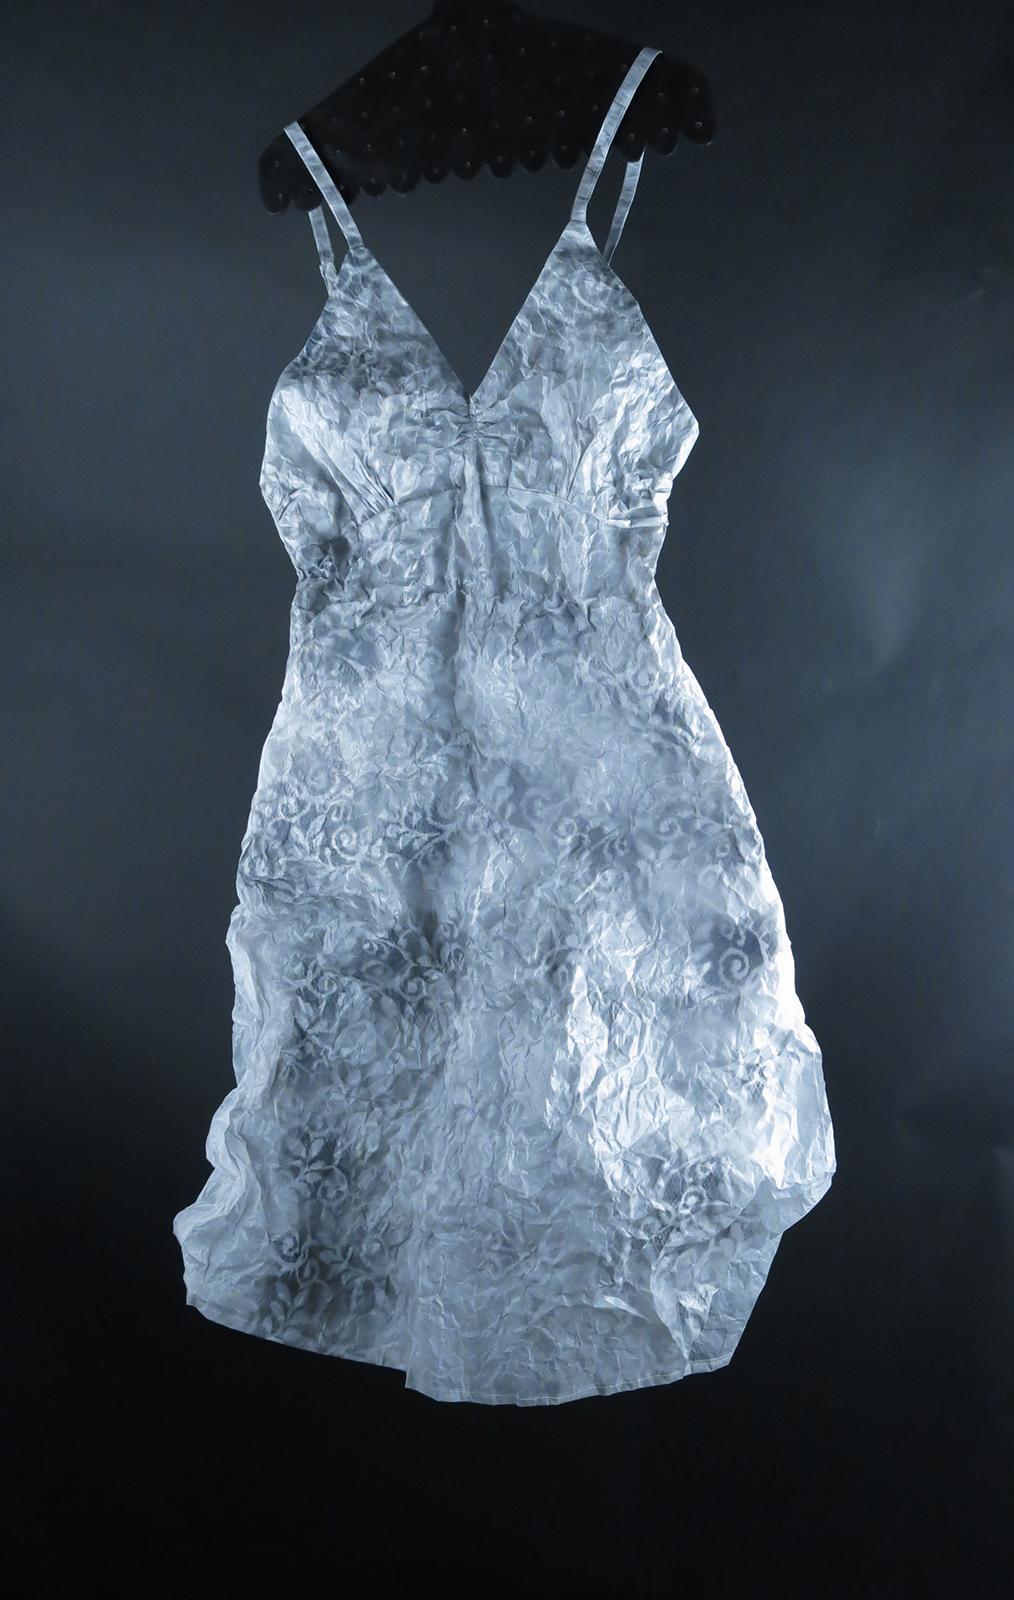 Stenciled Slip (Figurative White Glassine Still Life Sculpture of Clothing)